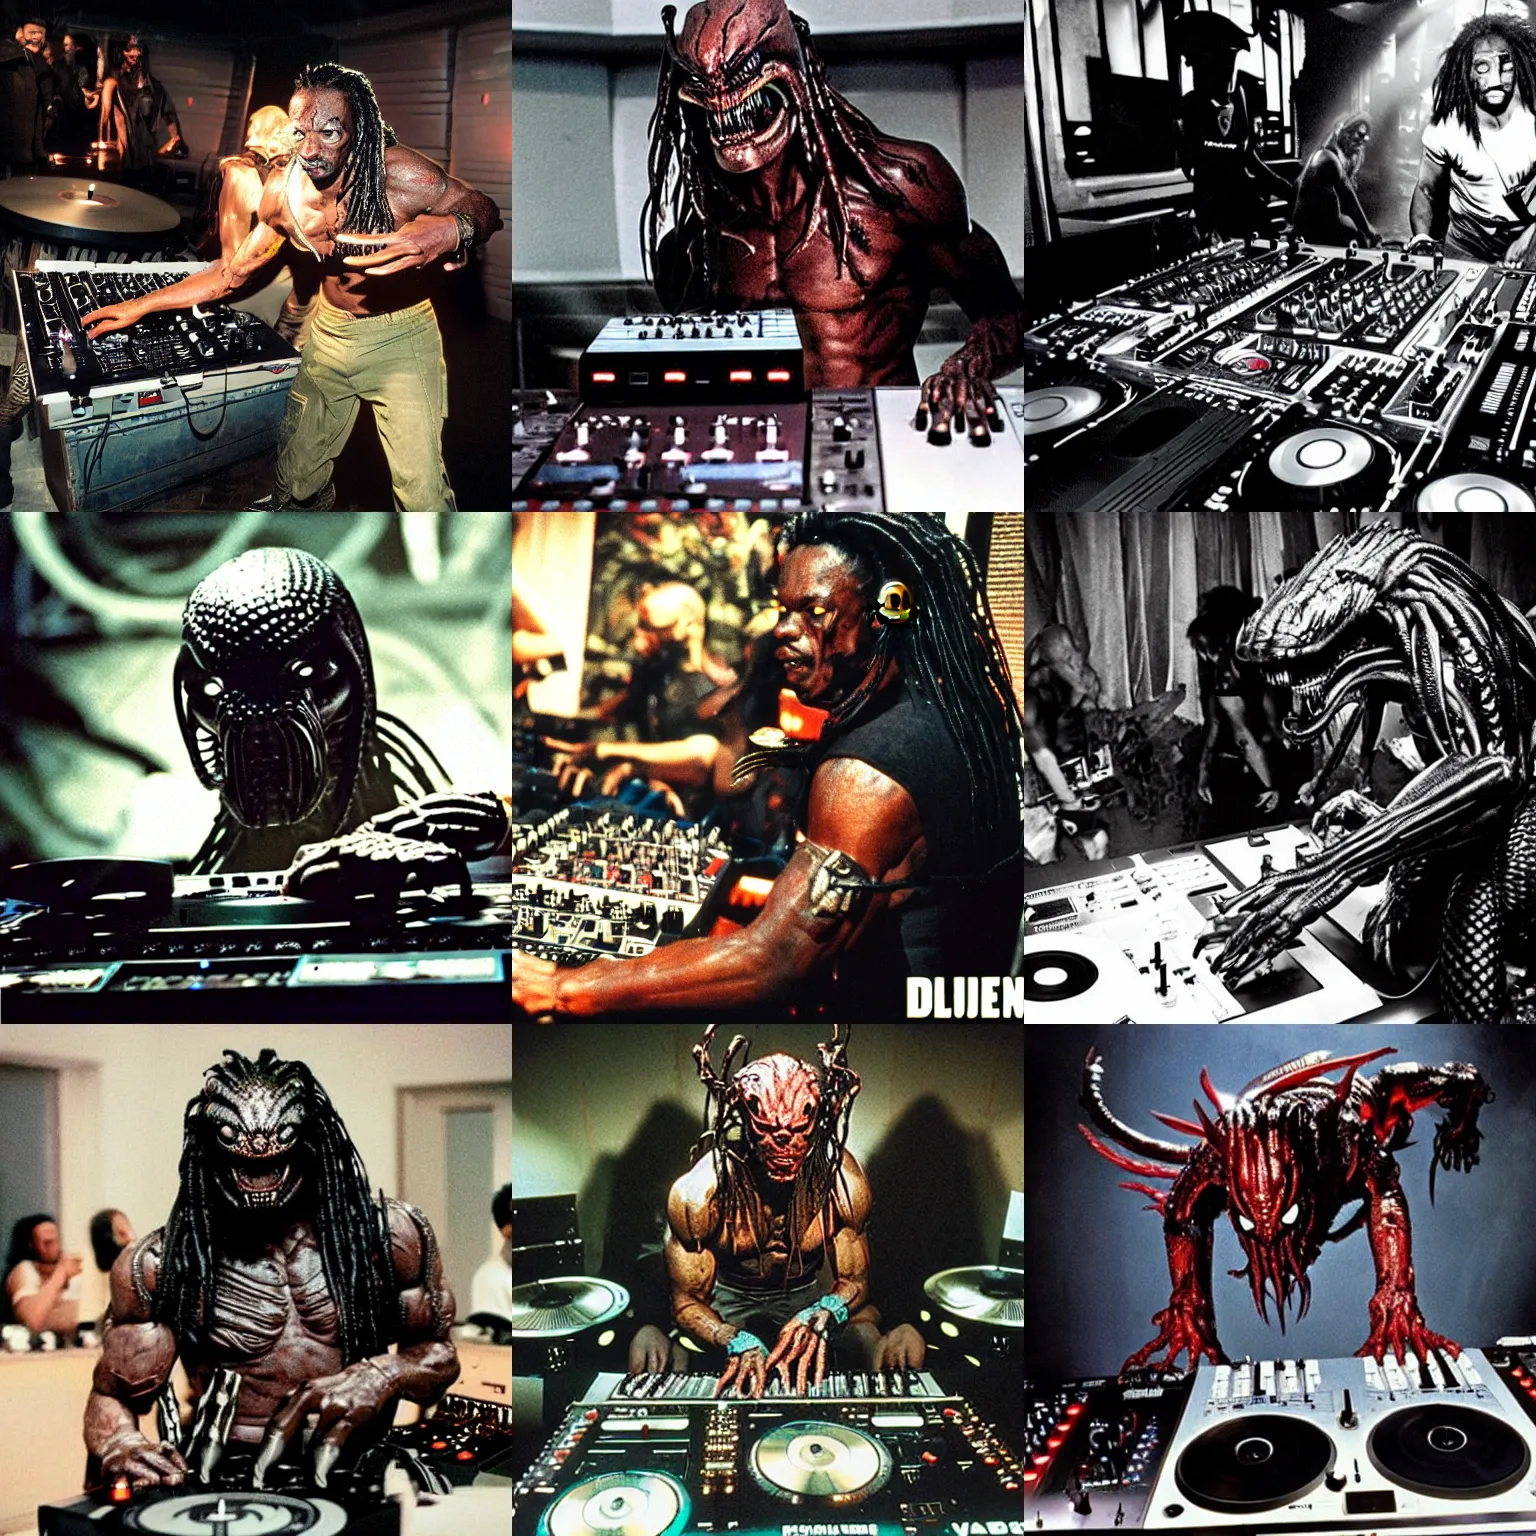 Prompt: predator movie alien DJing with DJ turntables, photoreal